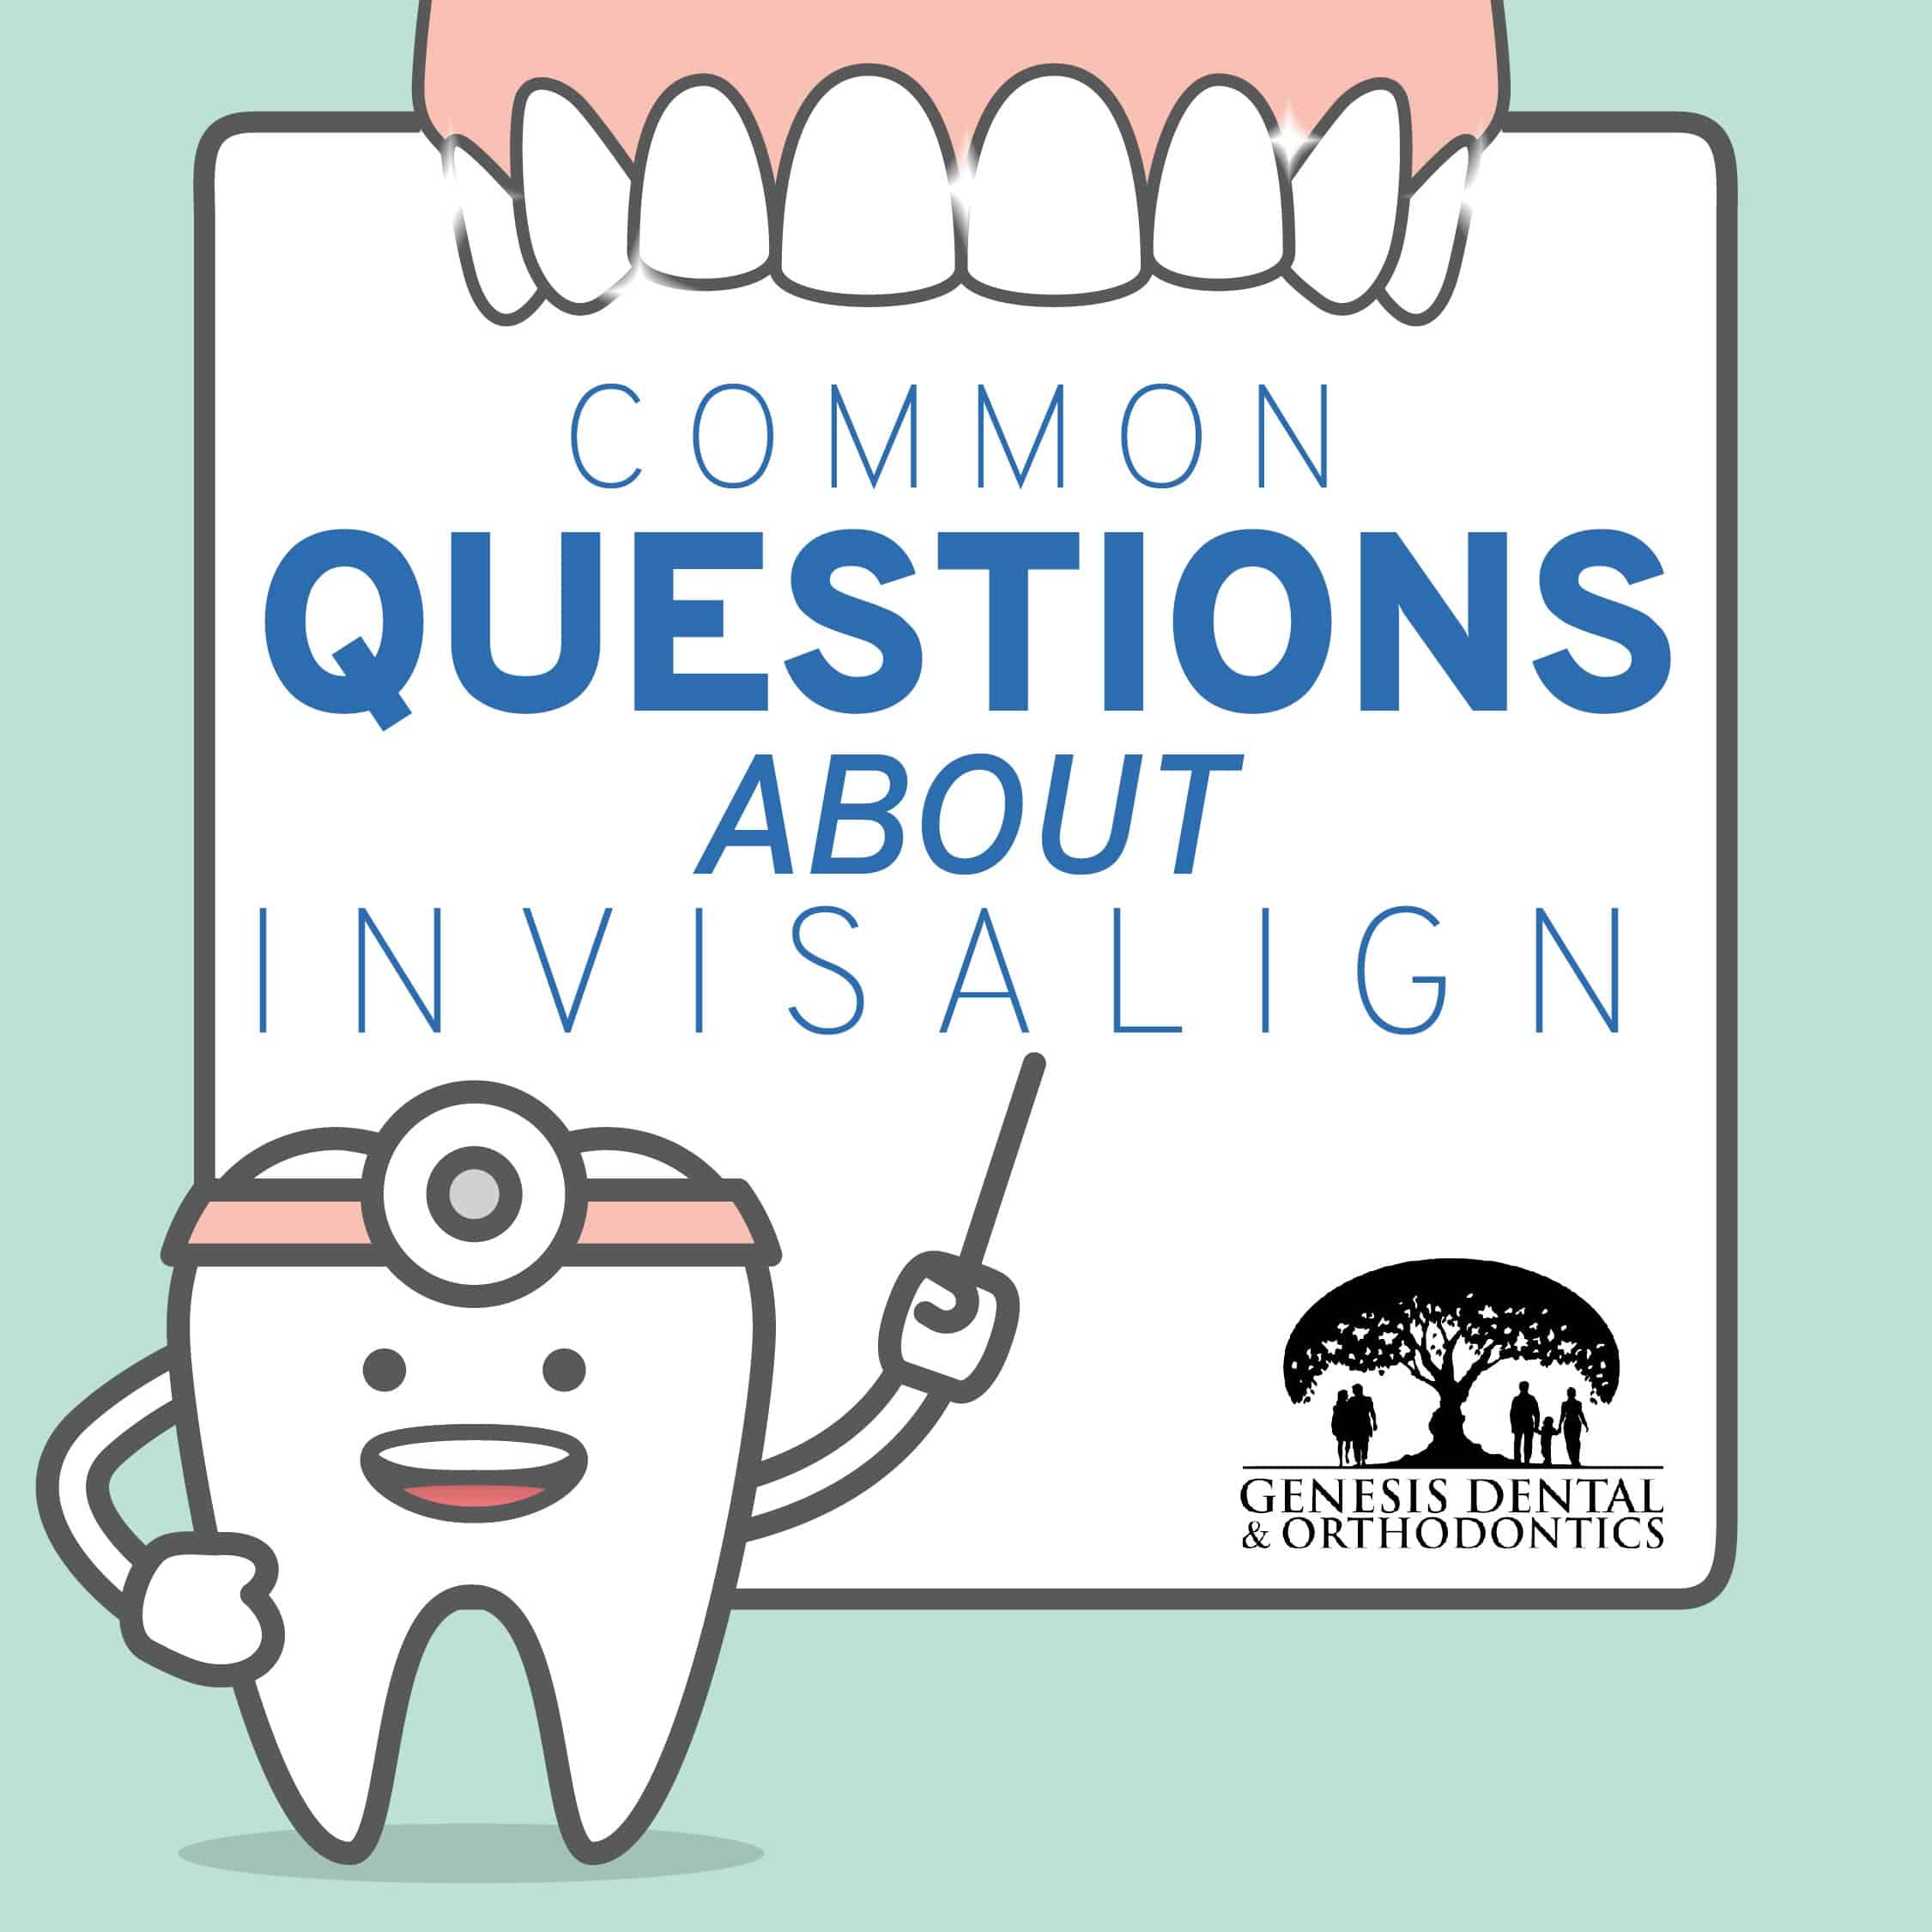 Invisalign Questions, Genesis Dental